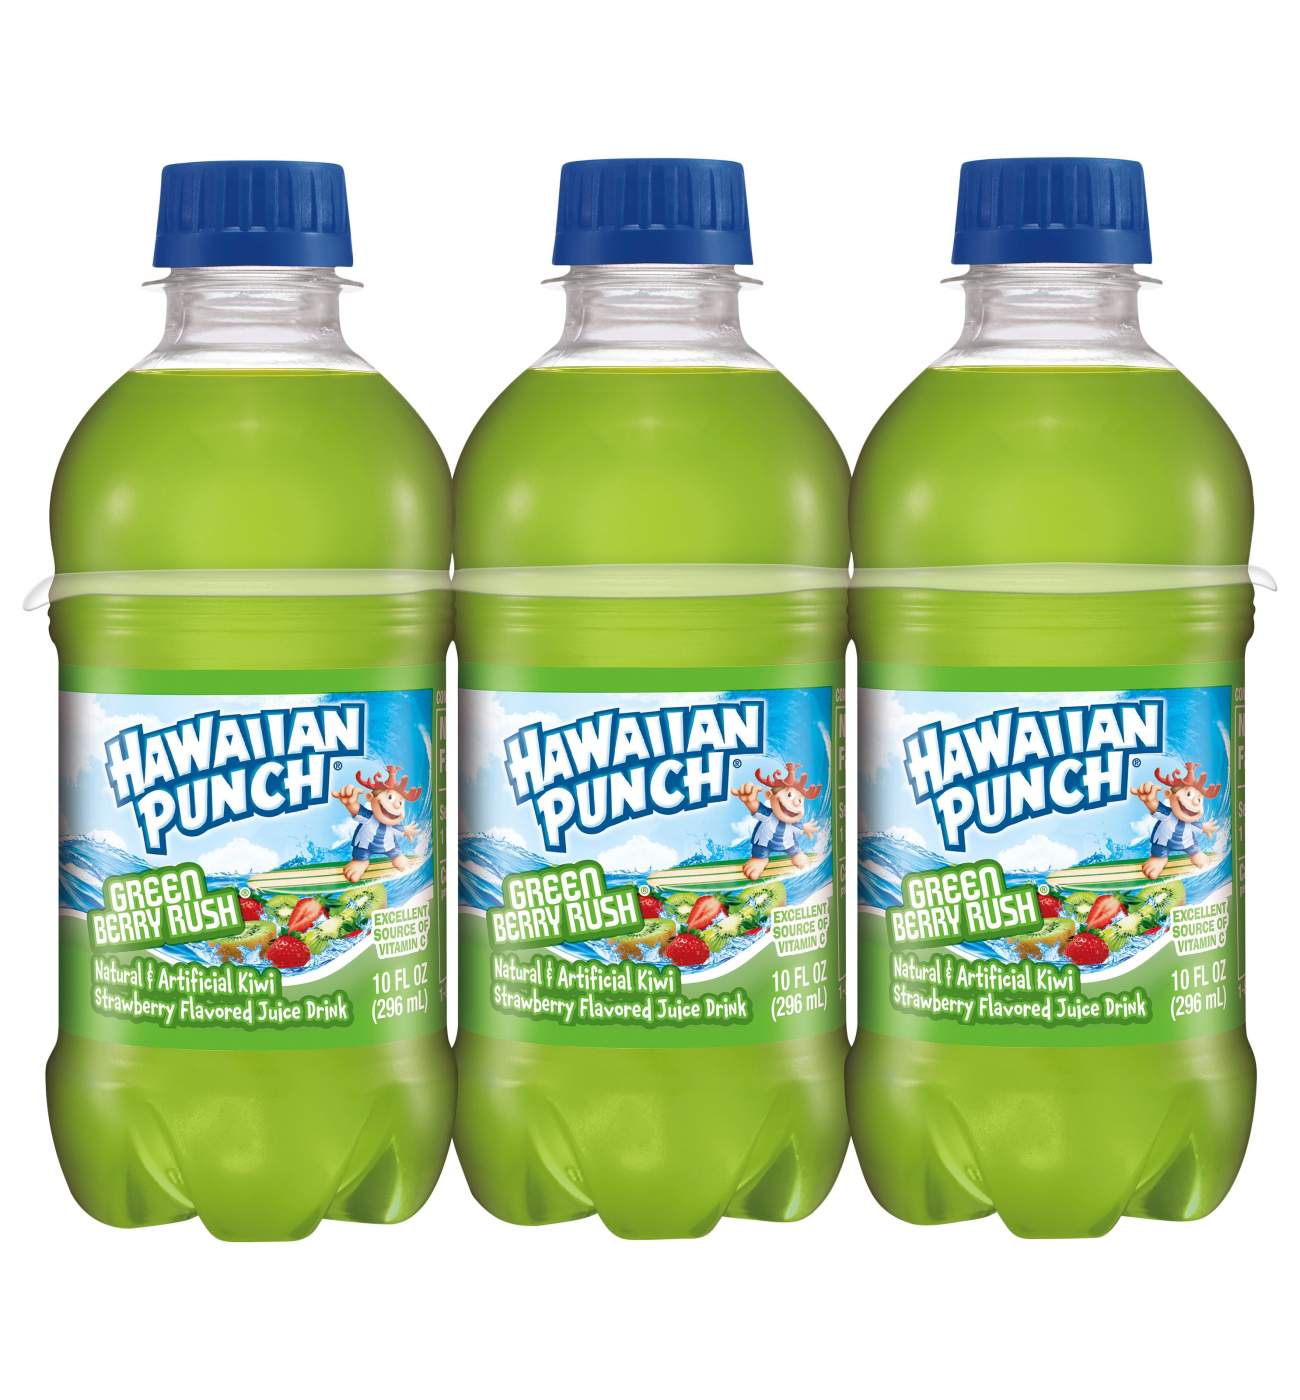 Hawaiian Punch Green Berry Rush 10 oz Bottles; image 2 of 2